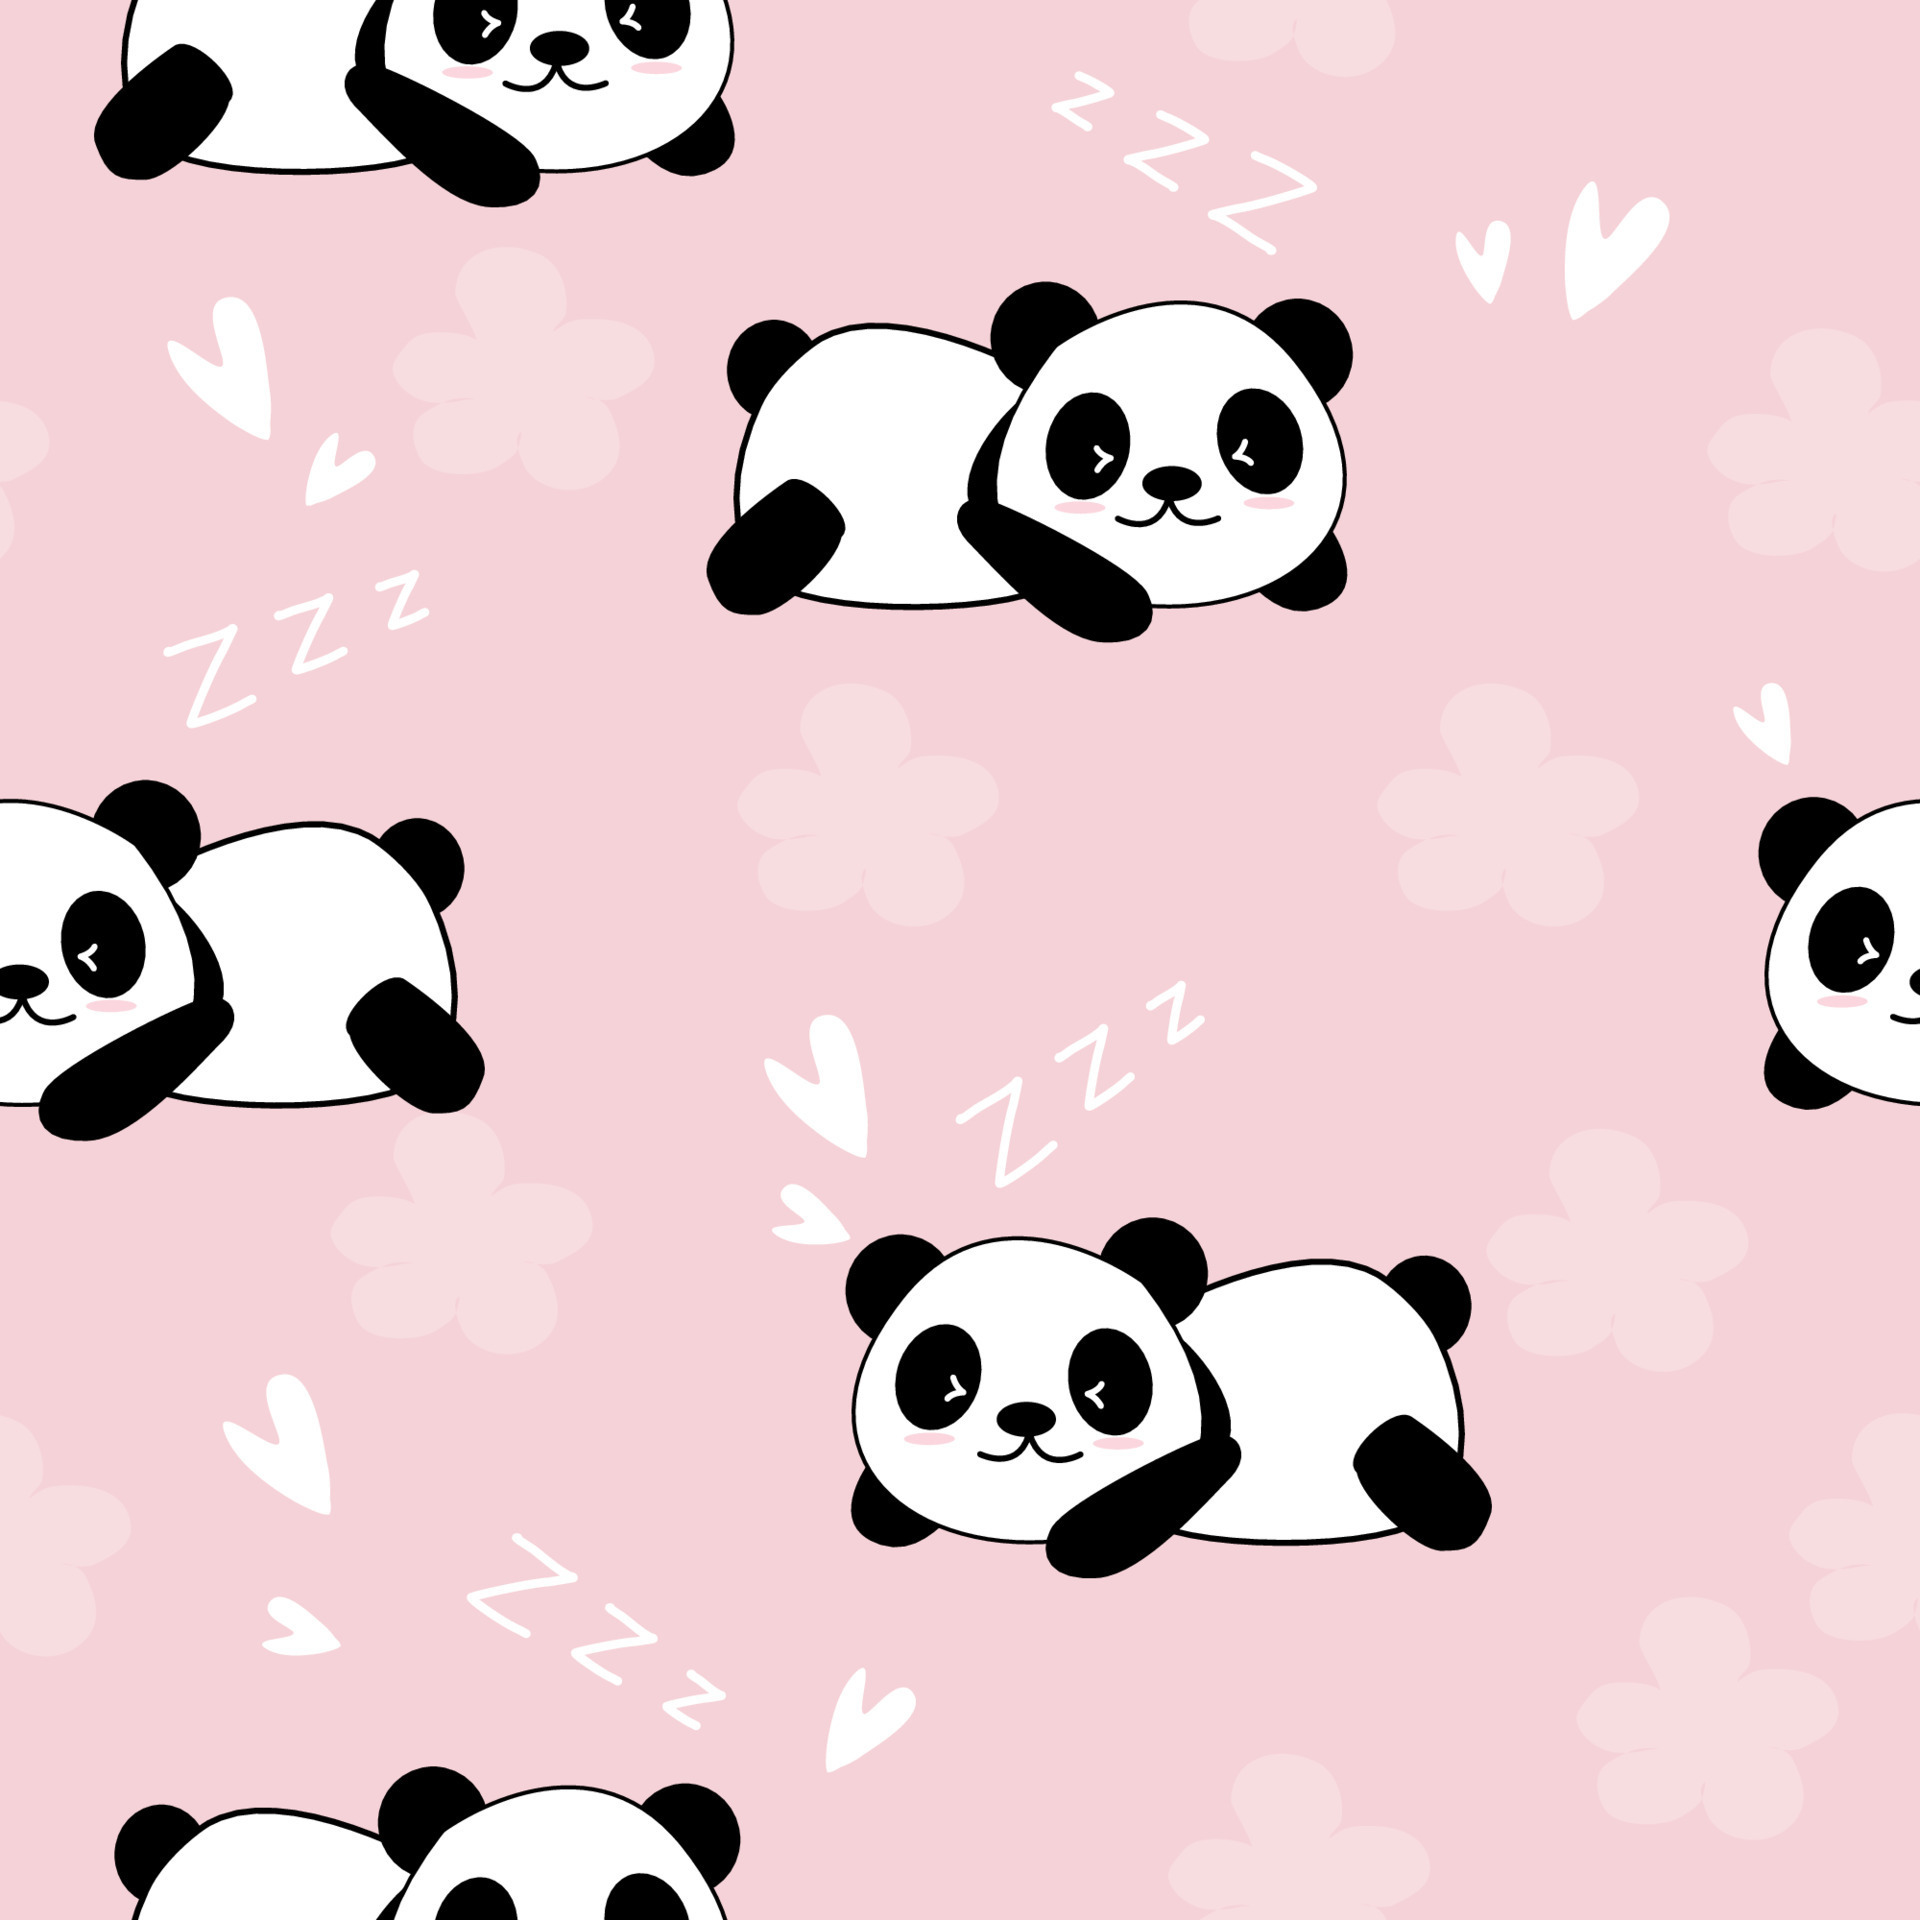 Cute Panda Seamless Pattern Background, Cartoon Panda Bears Vector  illustration, Creative kids for fabric, wrapping, textile, wallpaper,  apparel. 7888285 Vector Art at Vecteezy